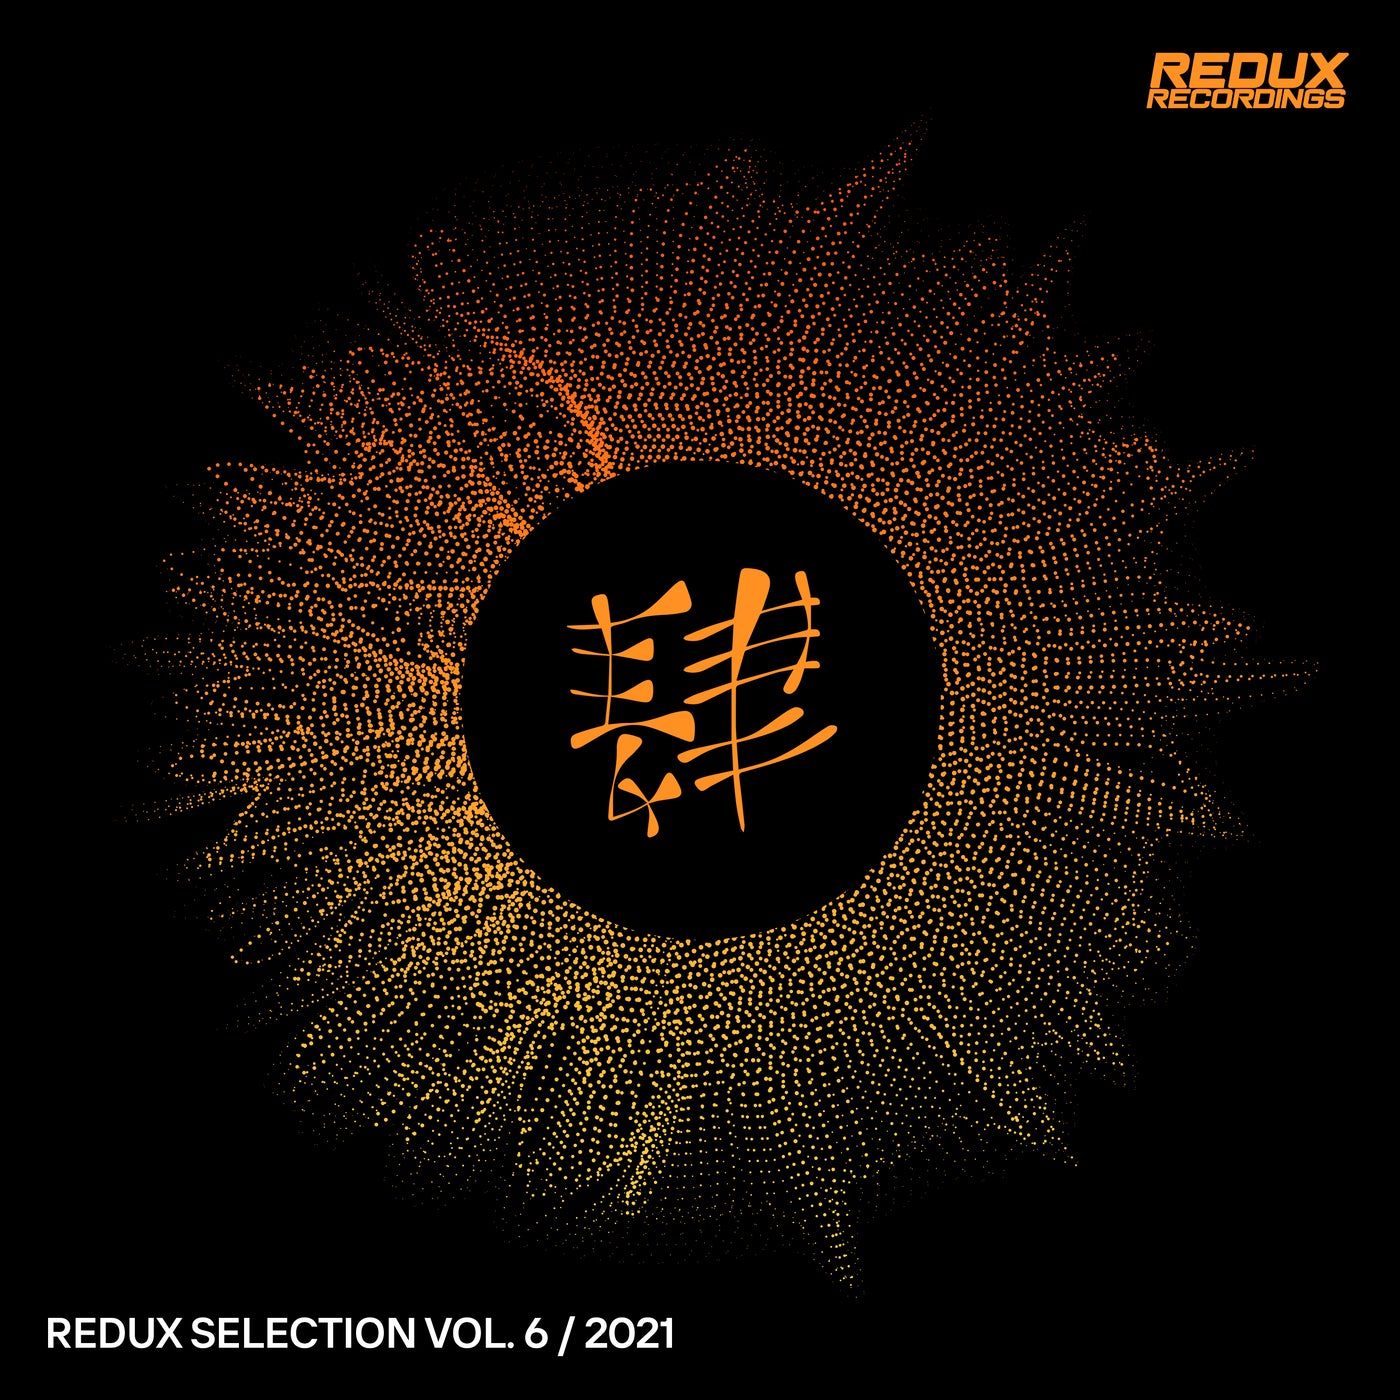 Redux Selection Vol. 6 / 2021